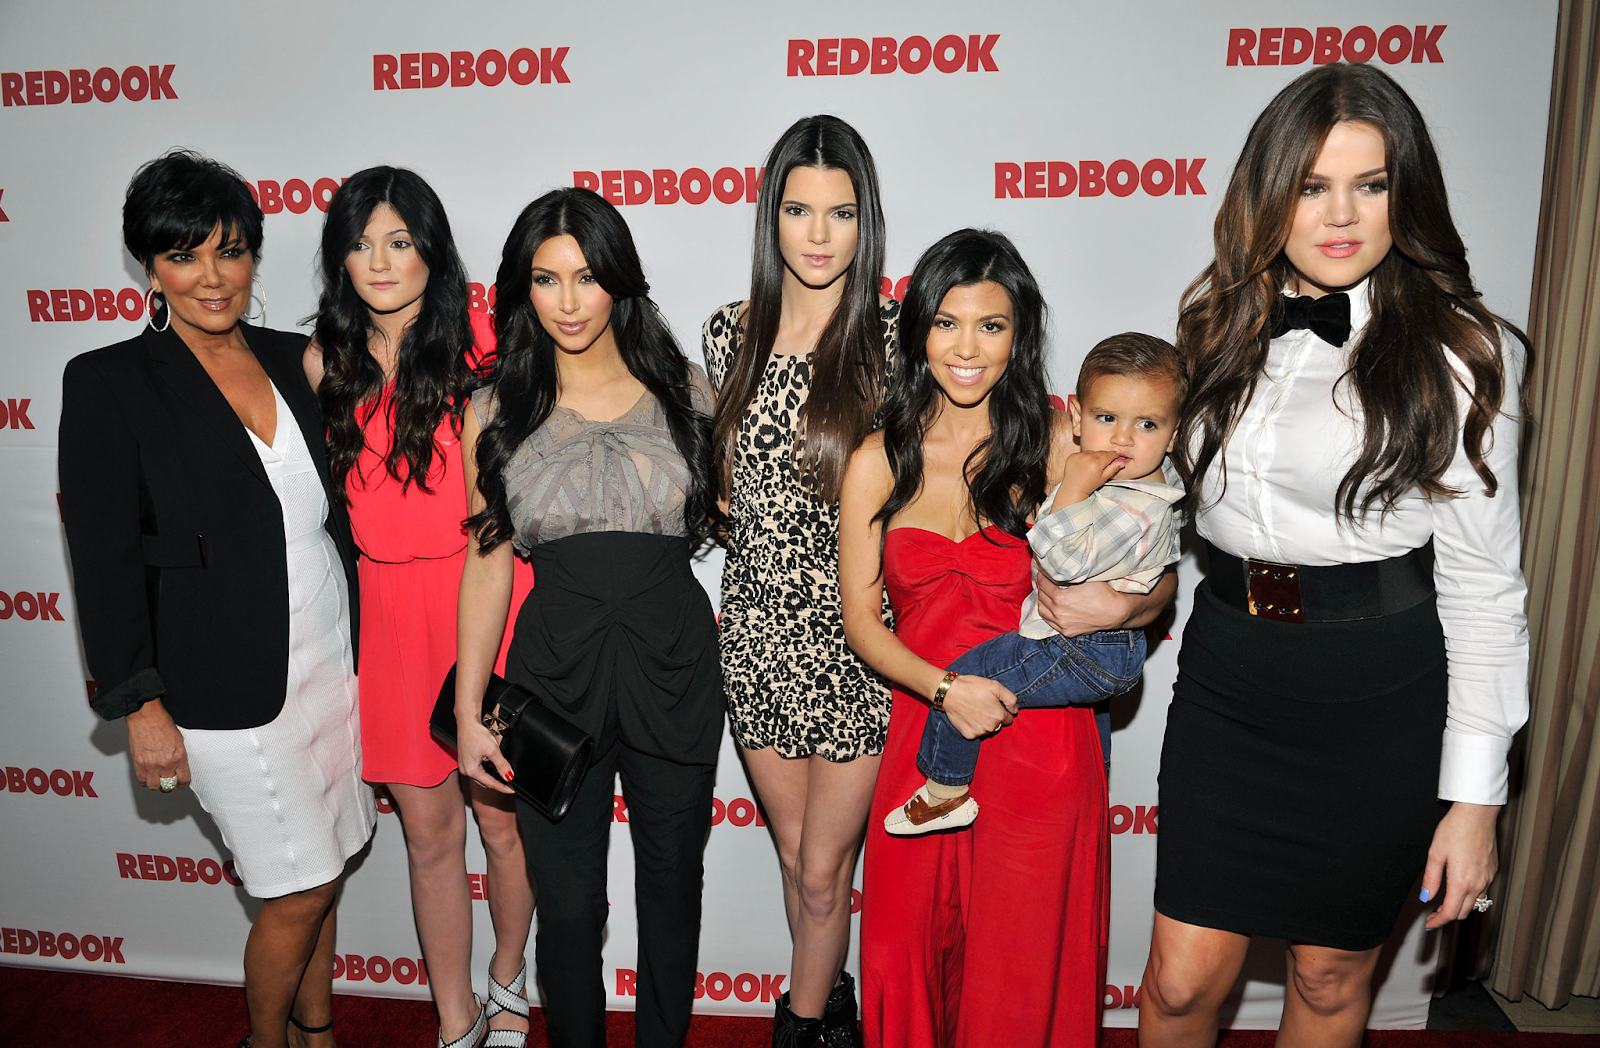 An image of Kris Jenner, Kylie Jenner, Kim Kardashian, Kendall Jenner, Kourtney Kardashian, Mason Disick, and Khloé Kardashian